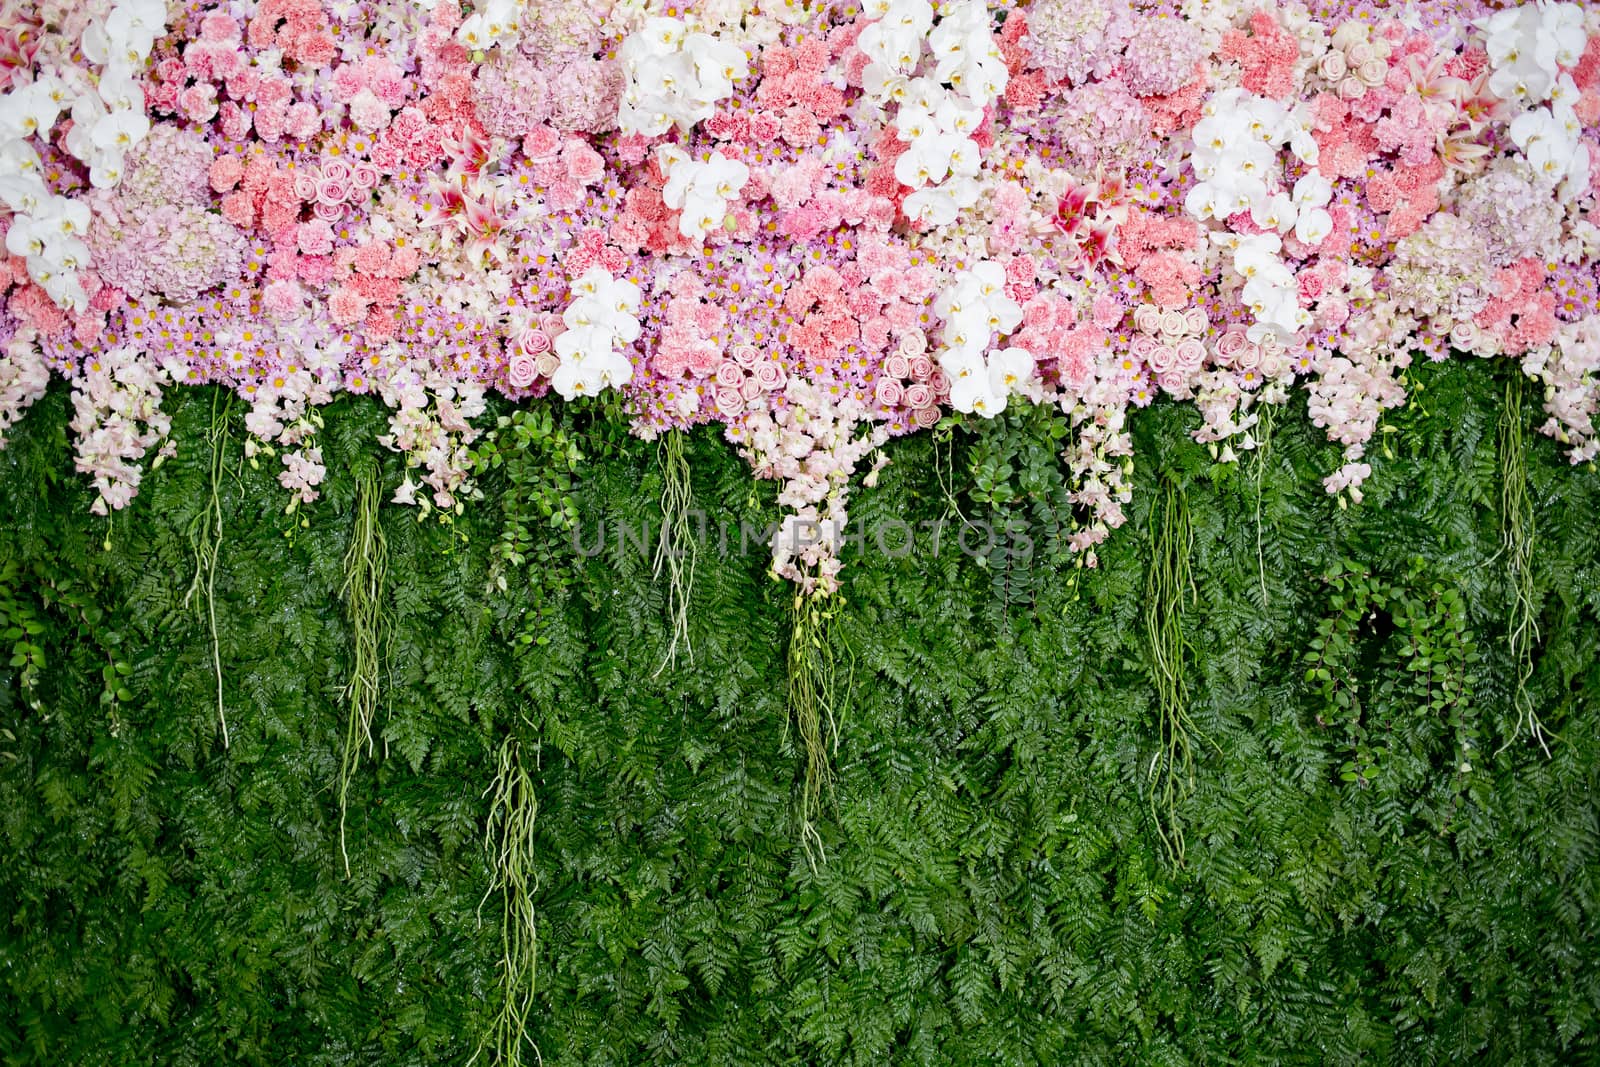 backdrop pink flowers and green leaf arrangement for wedding cer by art9858